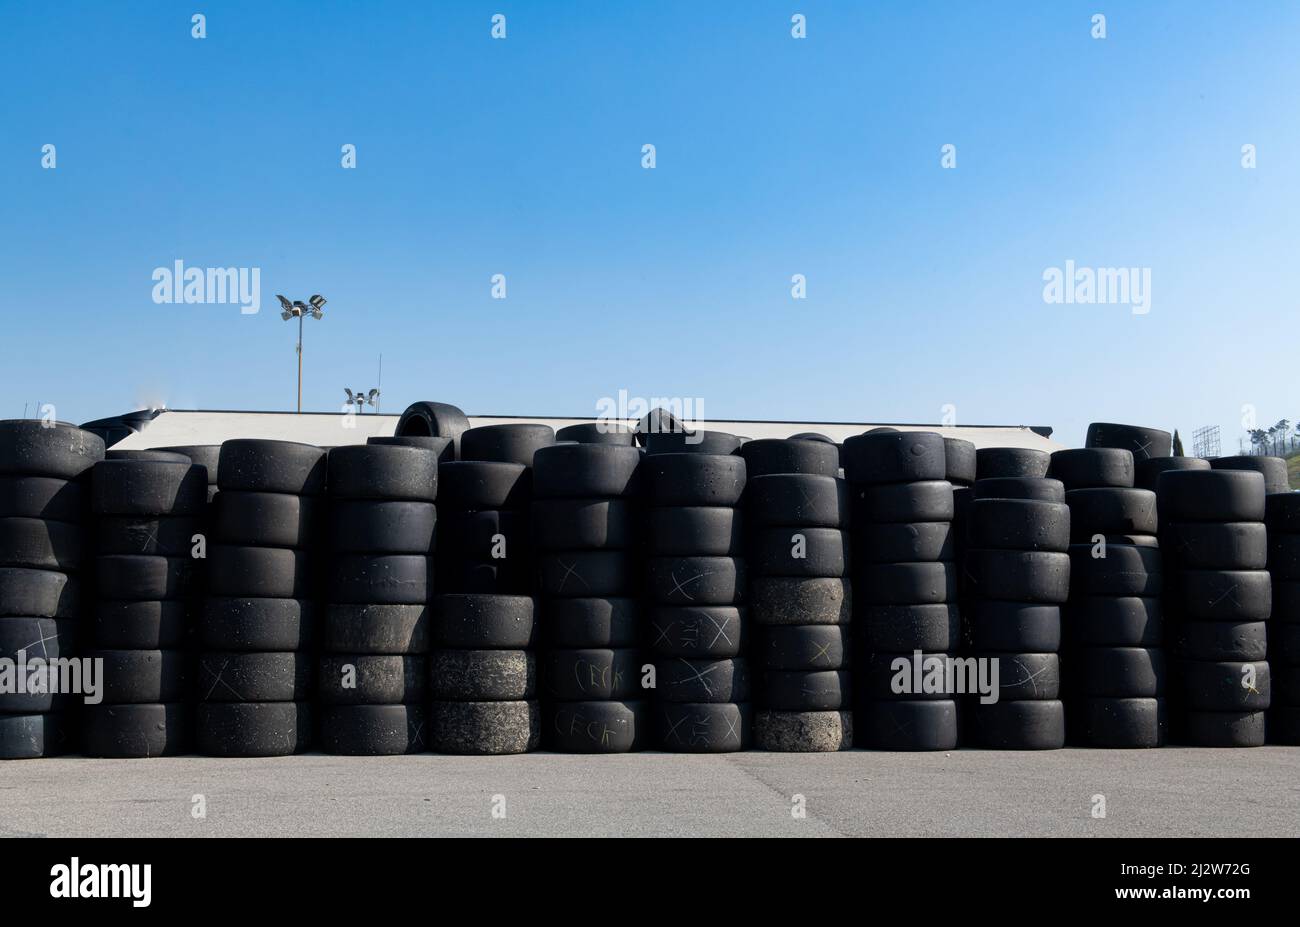 Gran grupo de viejos neumáticos de carreras usados apilados contra el cielo azul Foto de stock